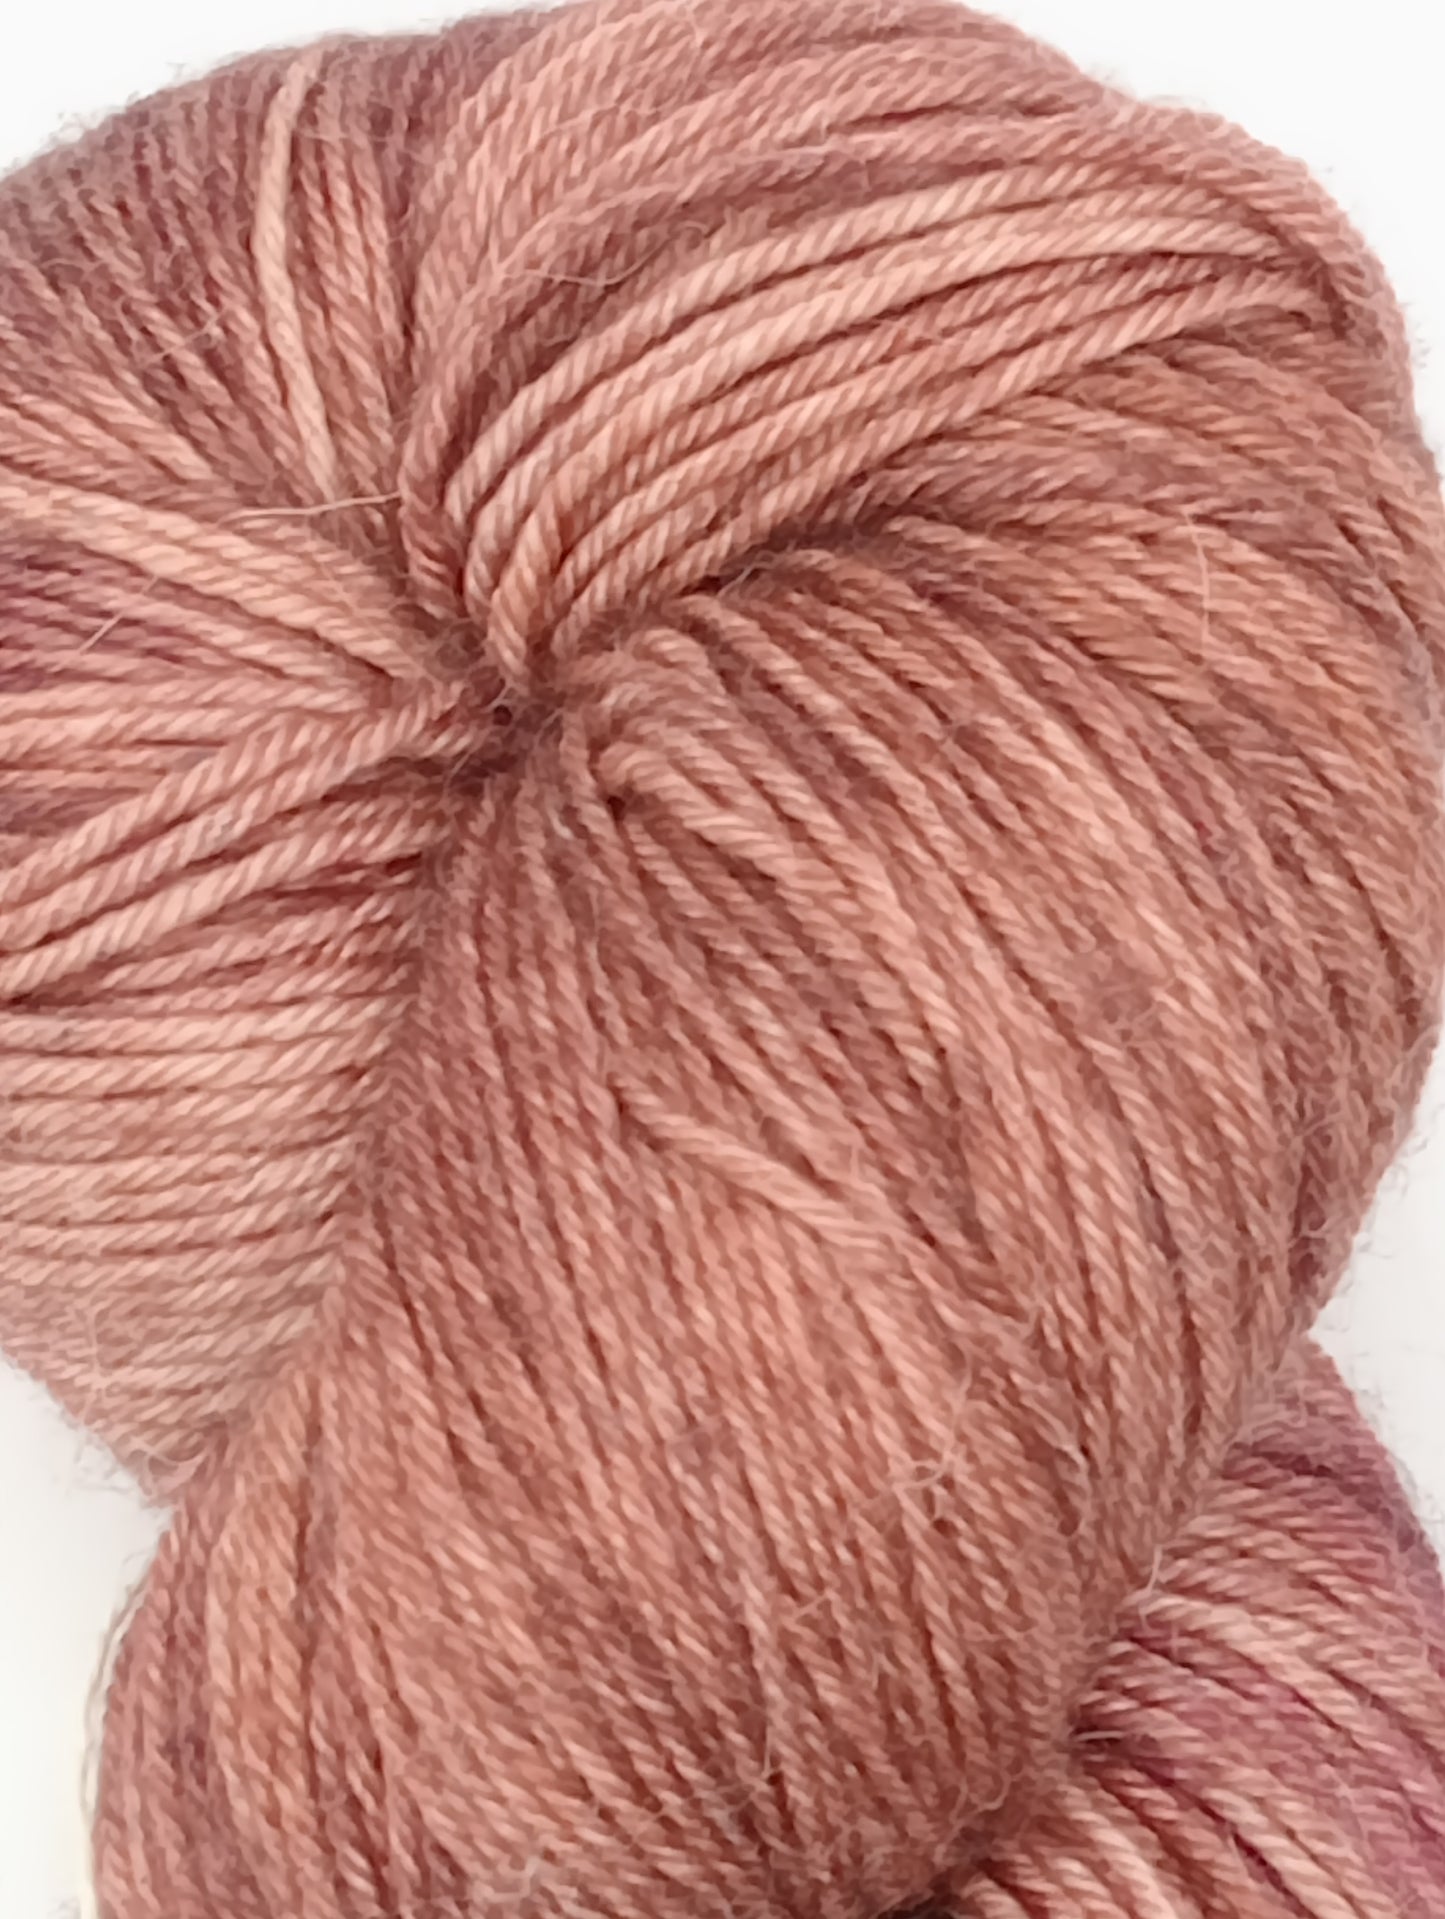 Baby Alpaca/Silk/Cashmere hand dyed Yarn 4 Ply- "Sienna Elegance"